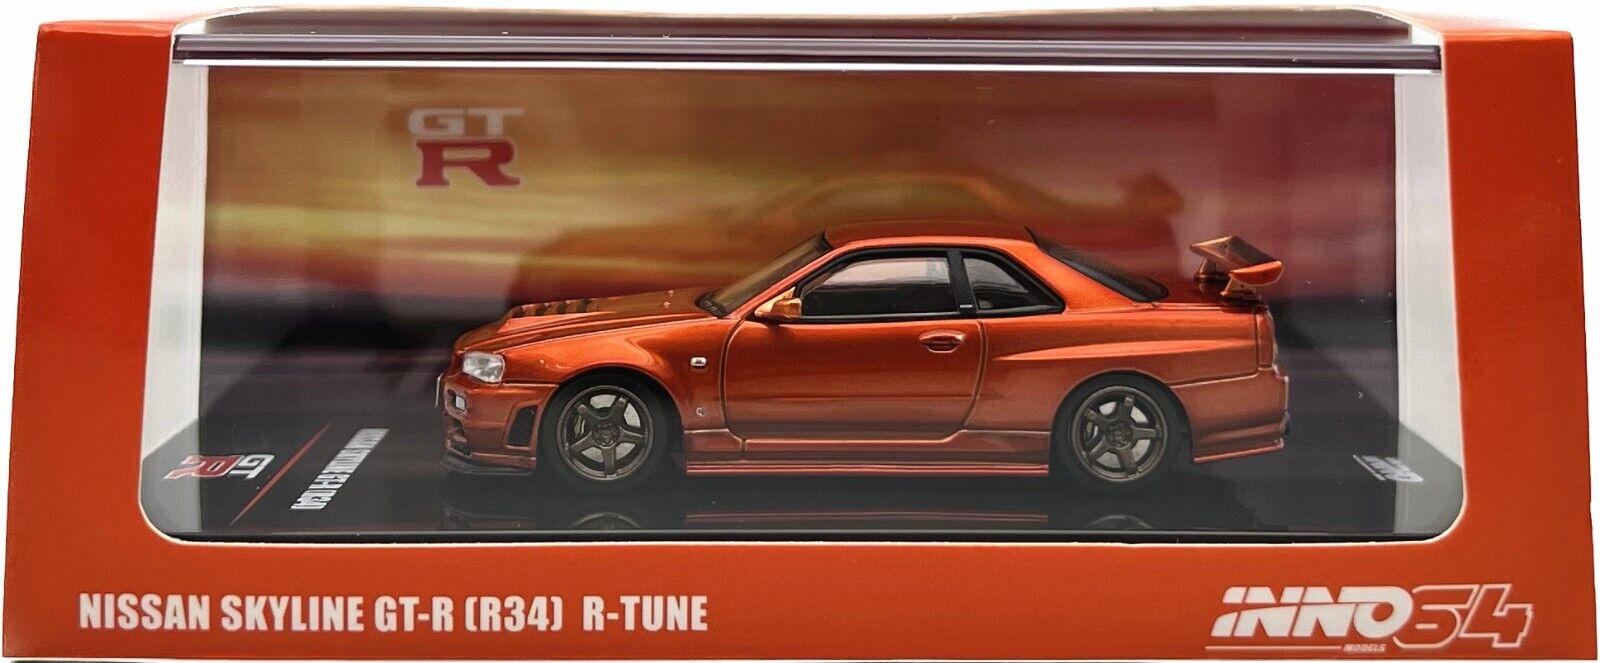 Inno64 Nissan Skyline GTR R34 R Tune Orange Metallic 1:64